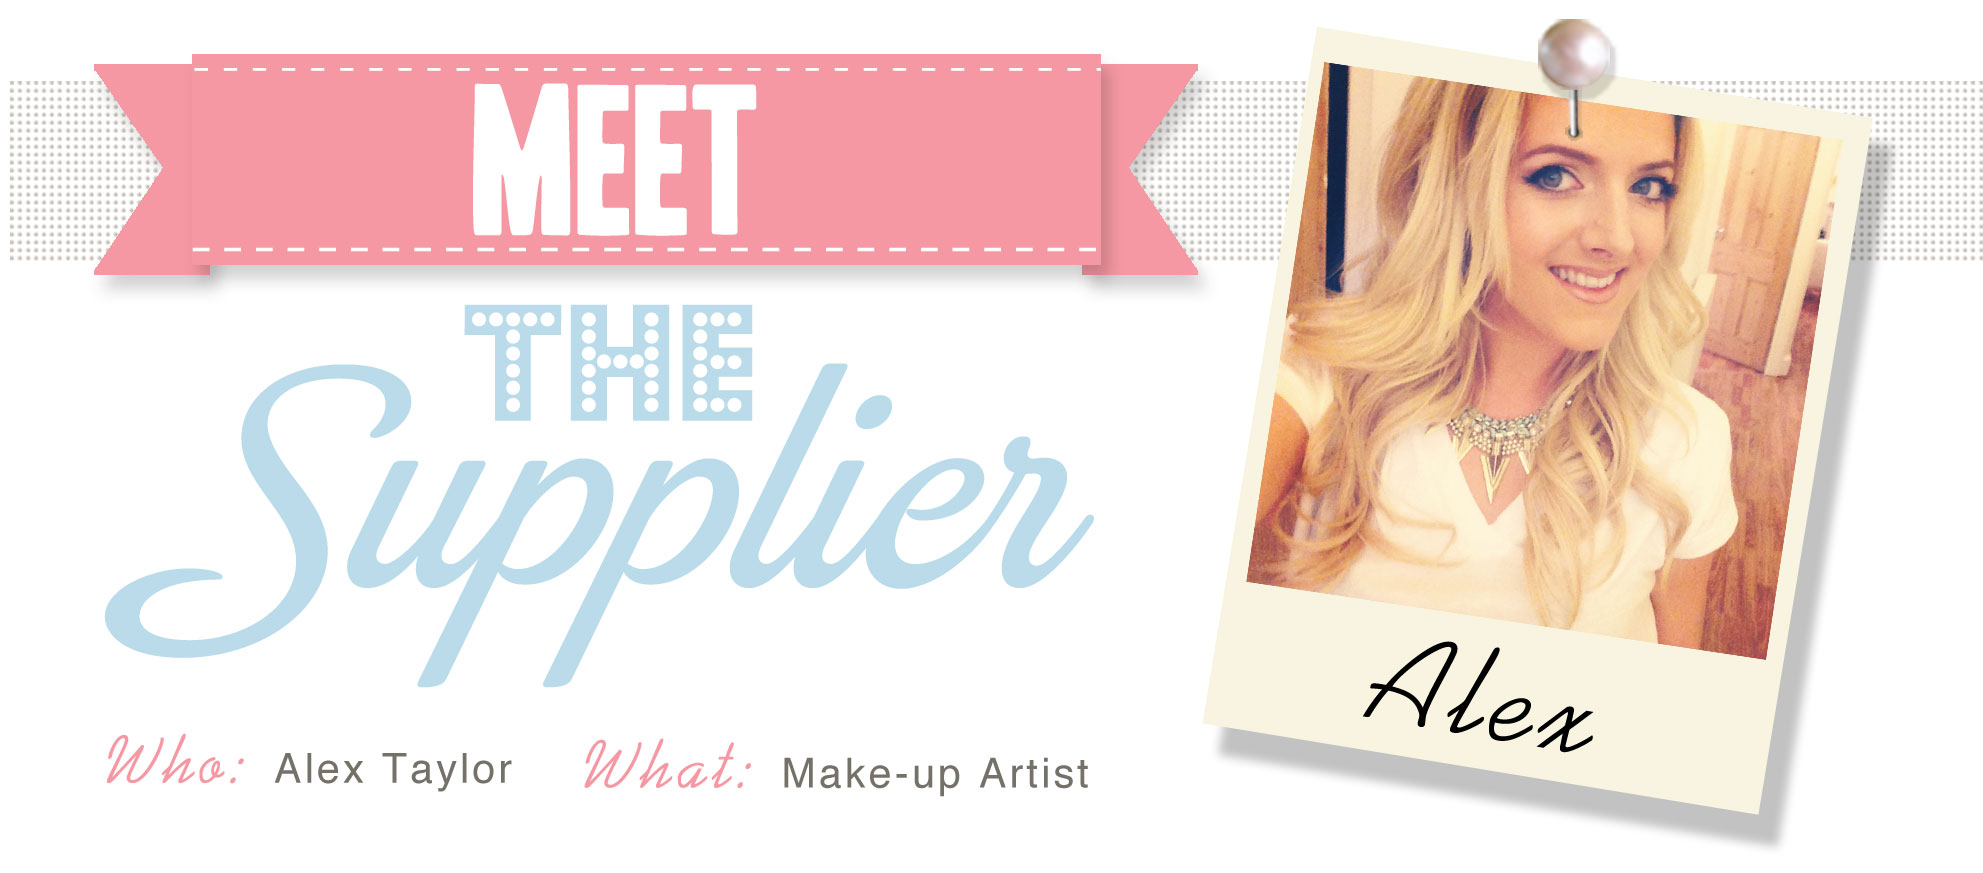 Wedding Make-up Artist Alex Taylor Interview